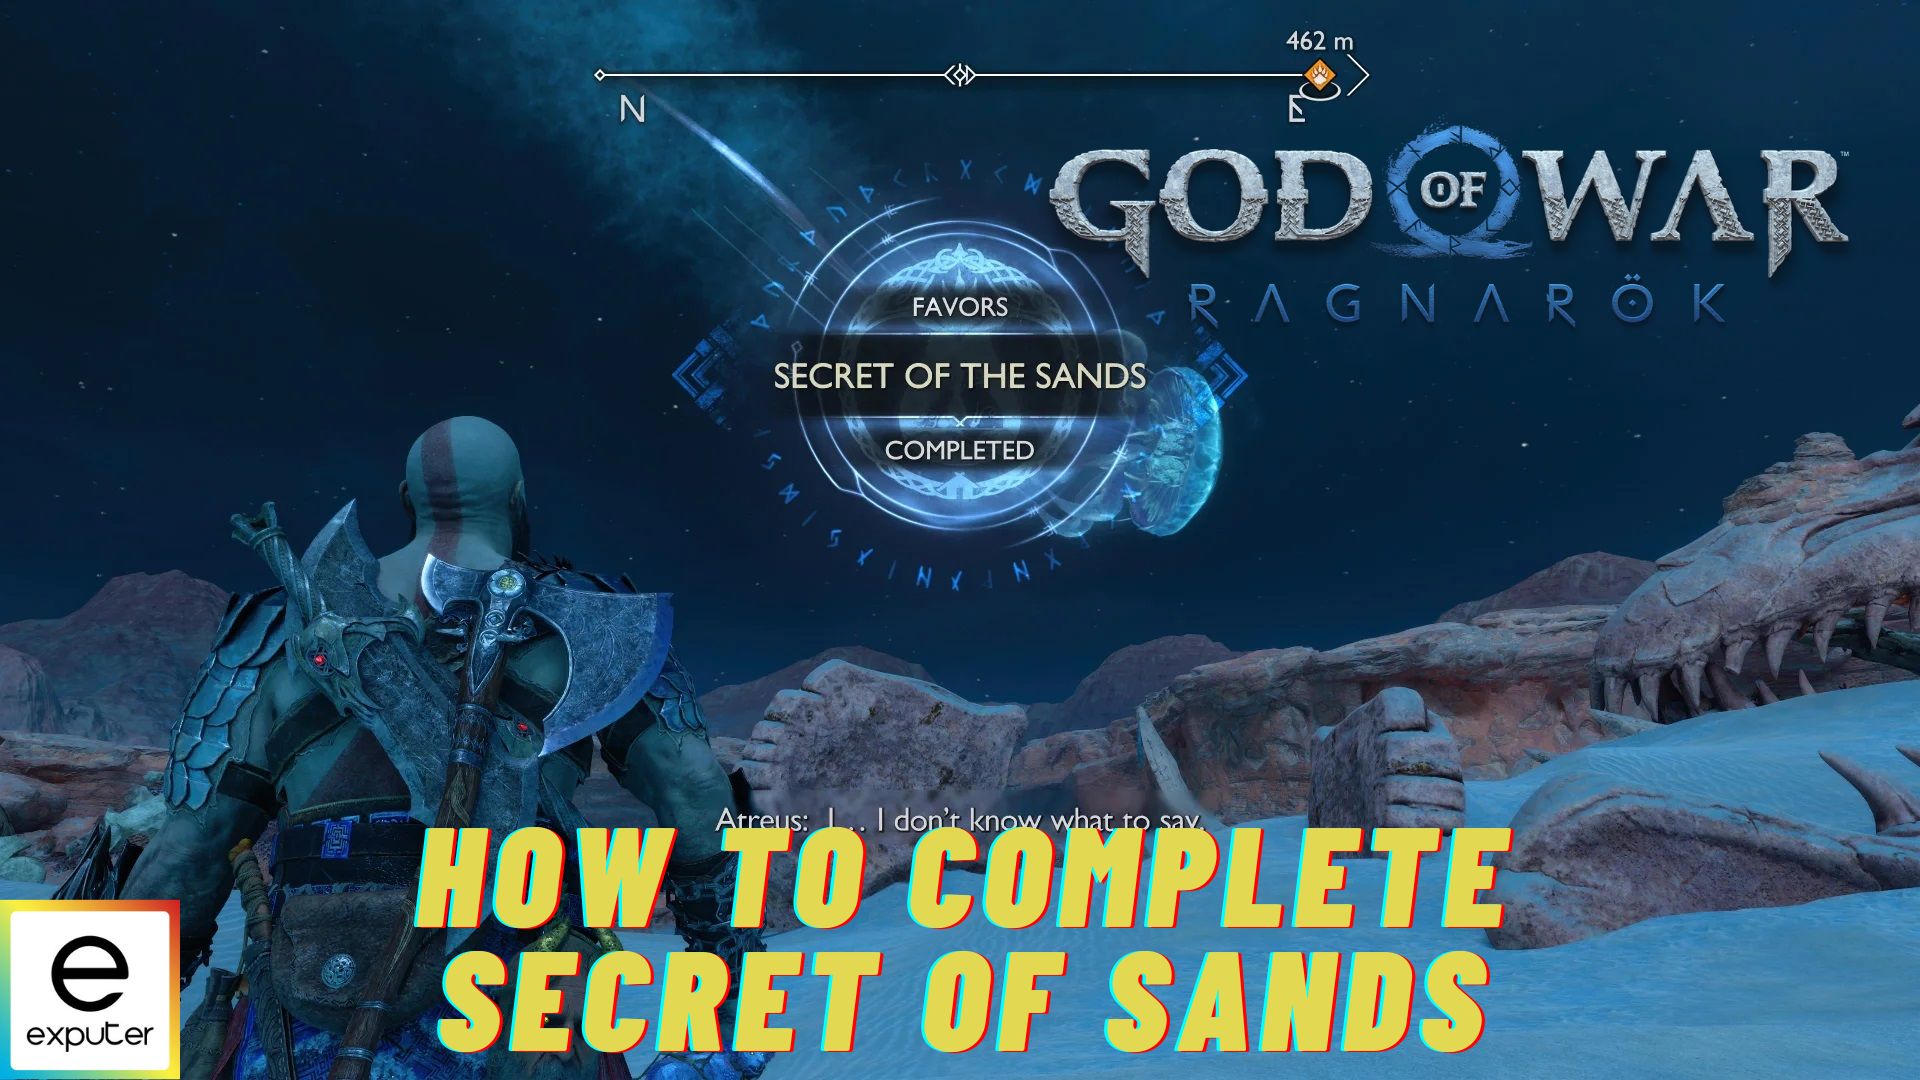 How to Complete Secret of Sands in GOW Ragnarok